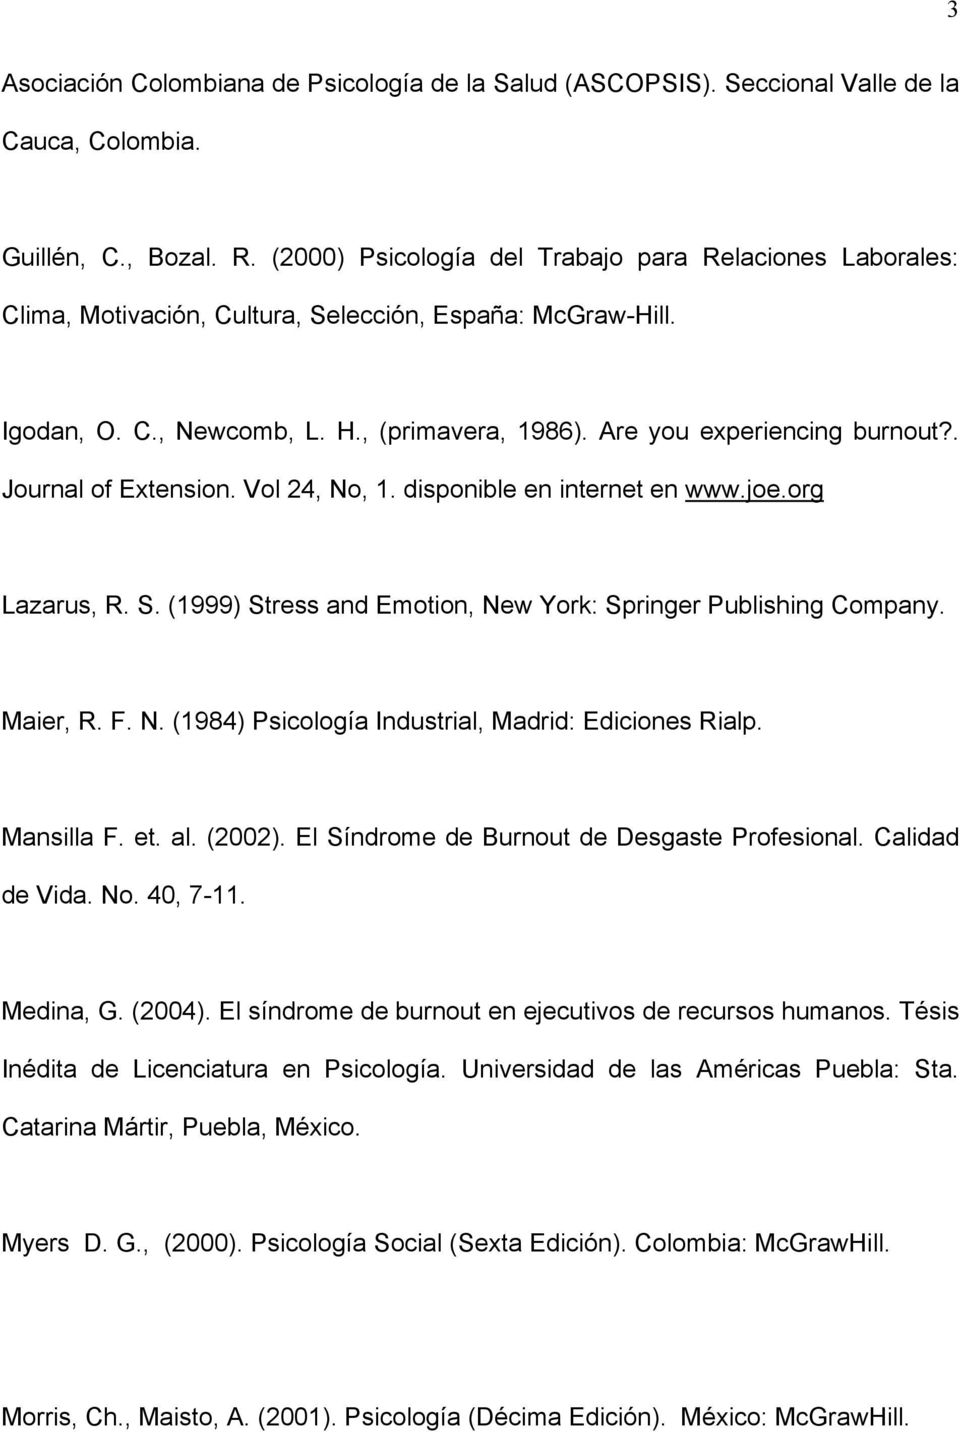 . Journal of Extension. Vol 24, No, 1. disponible en internet en www.joe.org Lazarus, R. S. (1999) Stress and Emotion, New York: Springer Publishing Company. Maier, R. F. N. (1984) Psicología Industrial, Madrid: Ediciones Rialp.